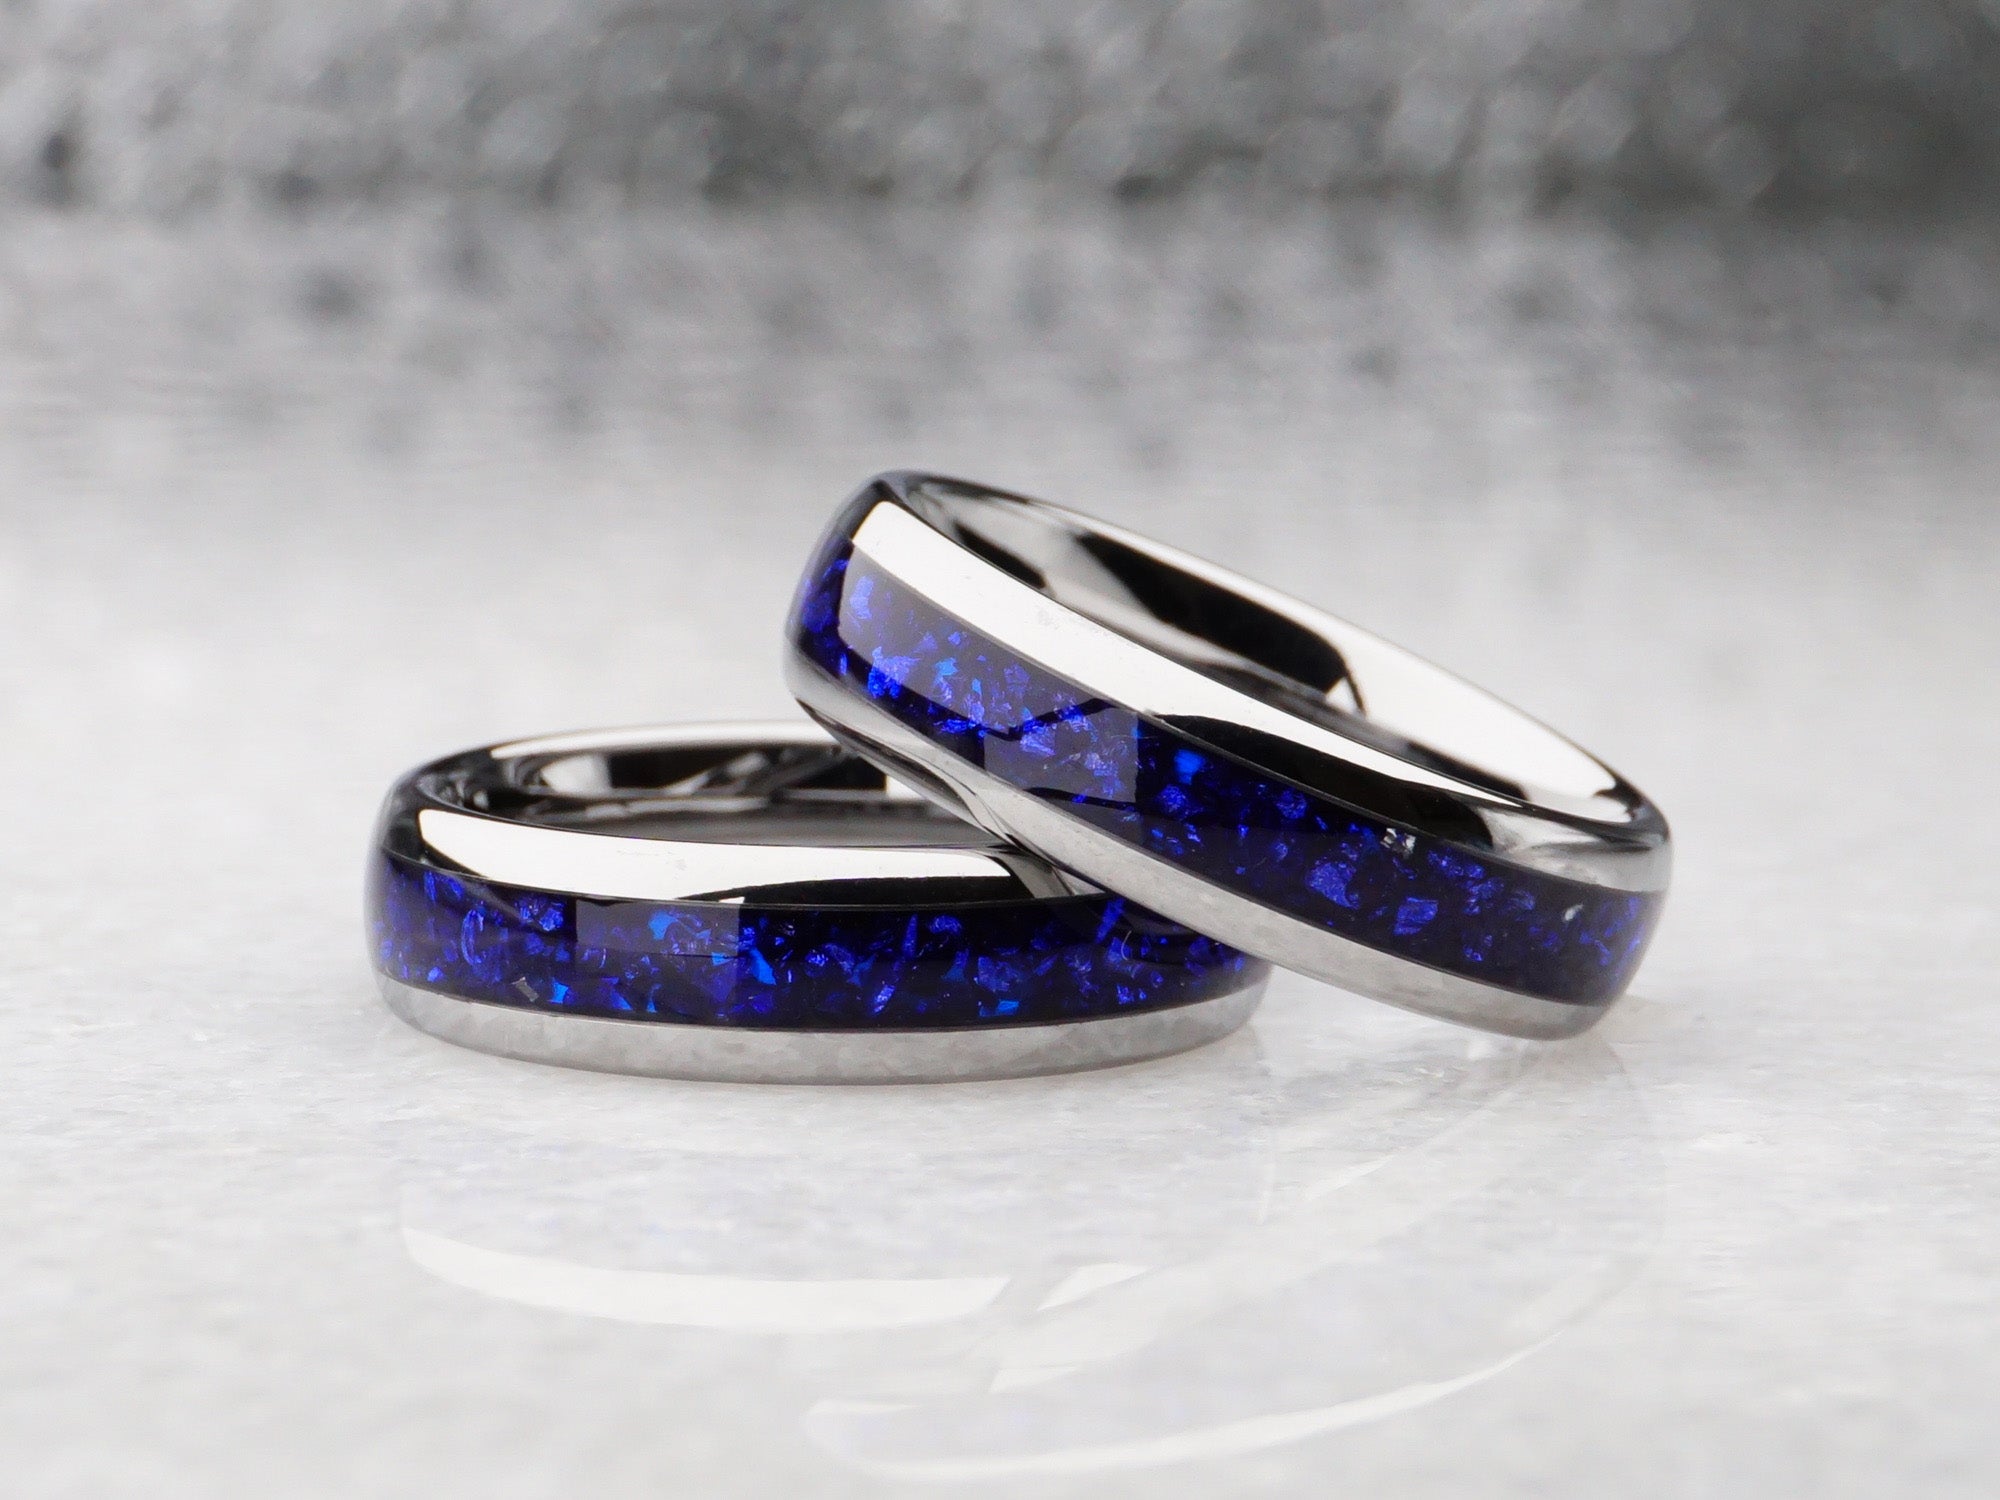 6mm blue sapphire ring, polished silver tungsten ring with dark blue lab sapphire gemstone inlay, modern wedding band